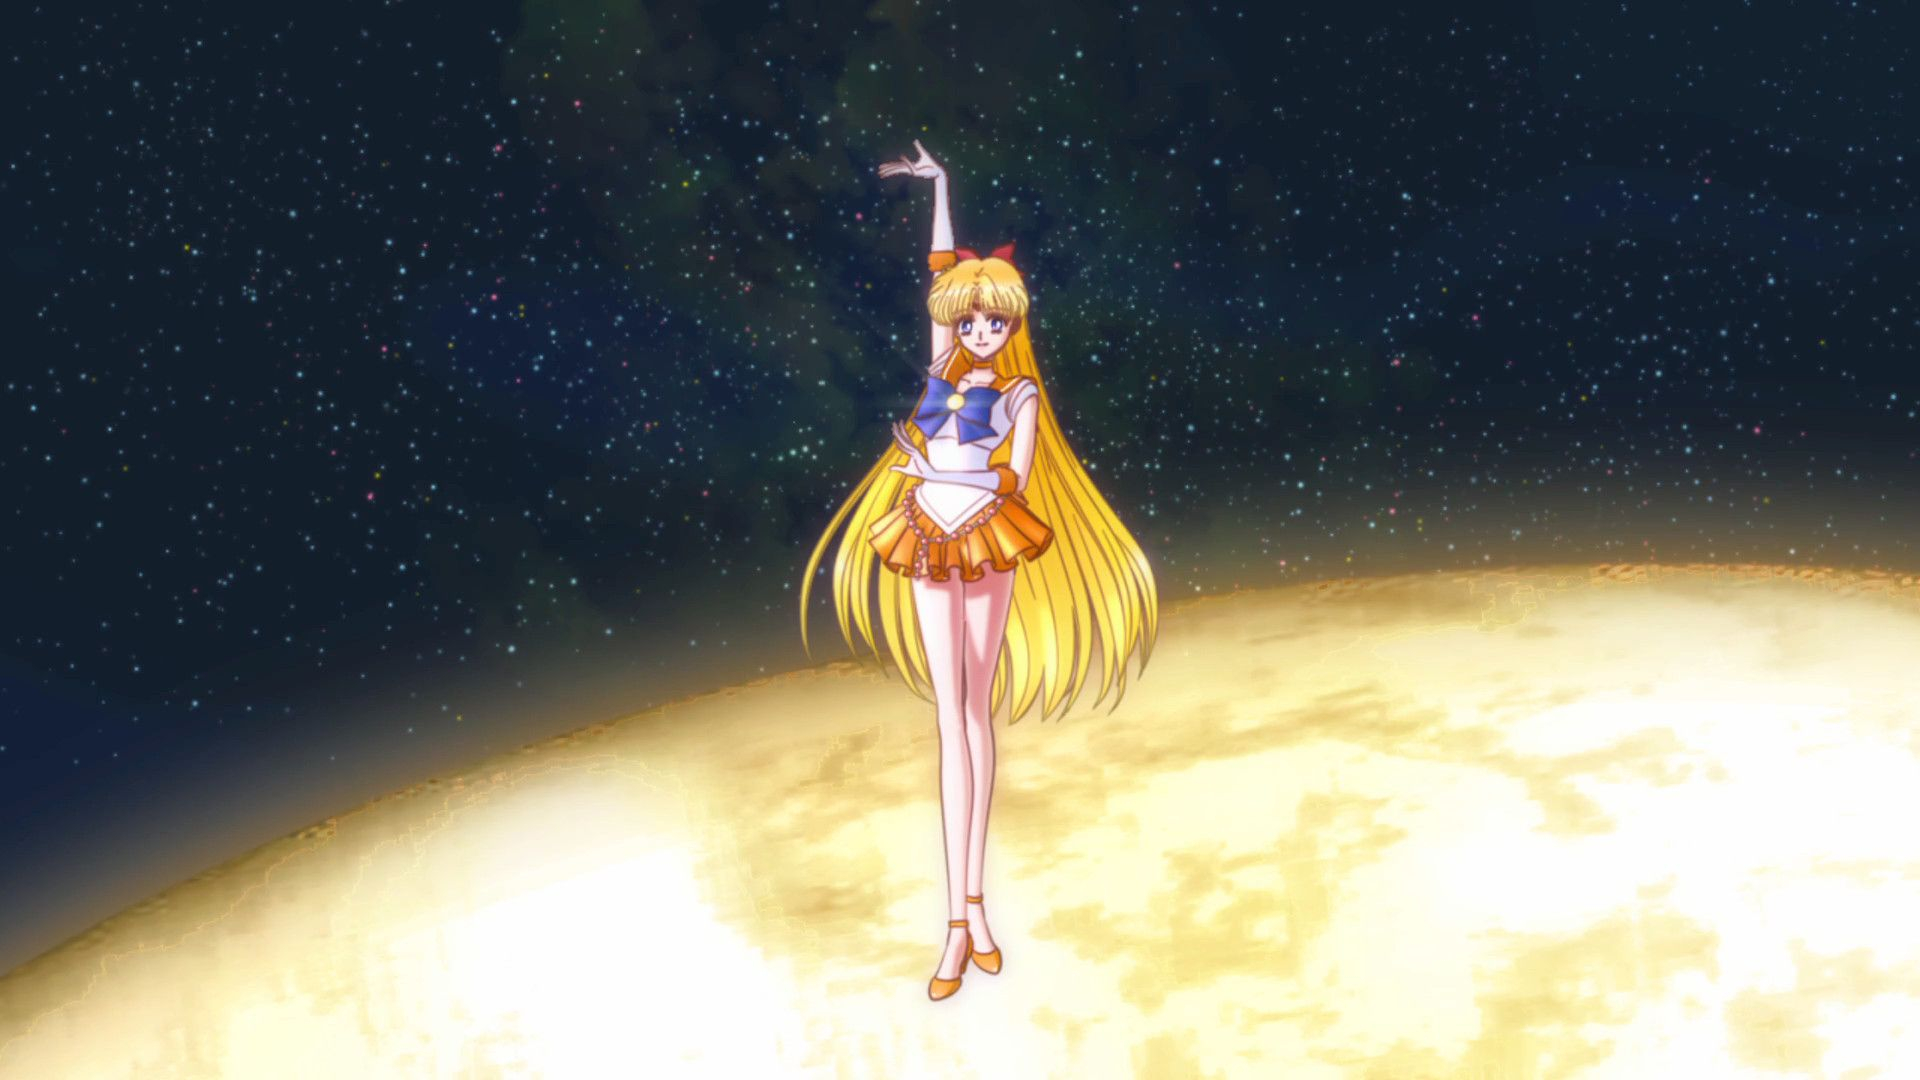 1920x1080 Venus main pose with planet background | Sailor moon crystal, Sailor moon screencaps, Sailor venus